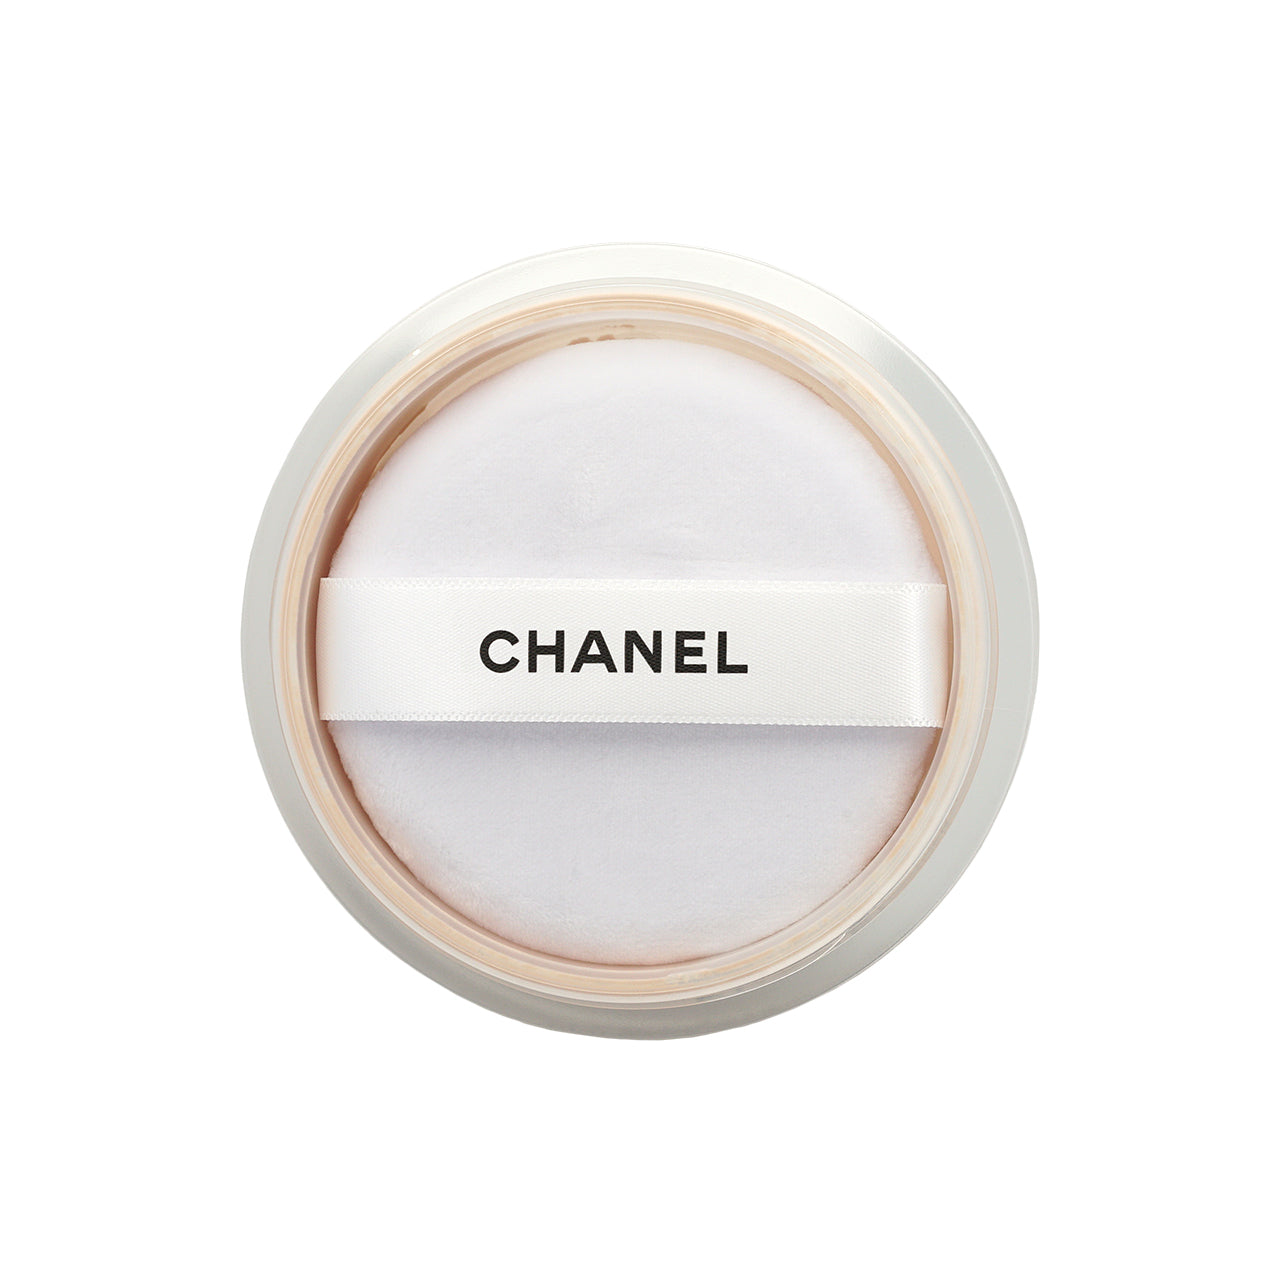 Chanel Poudre Universelle Libre #20 30g | Sasa Global eShop